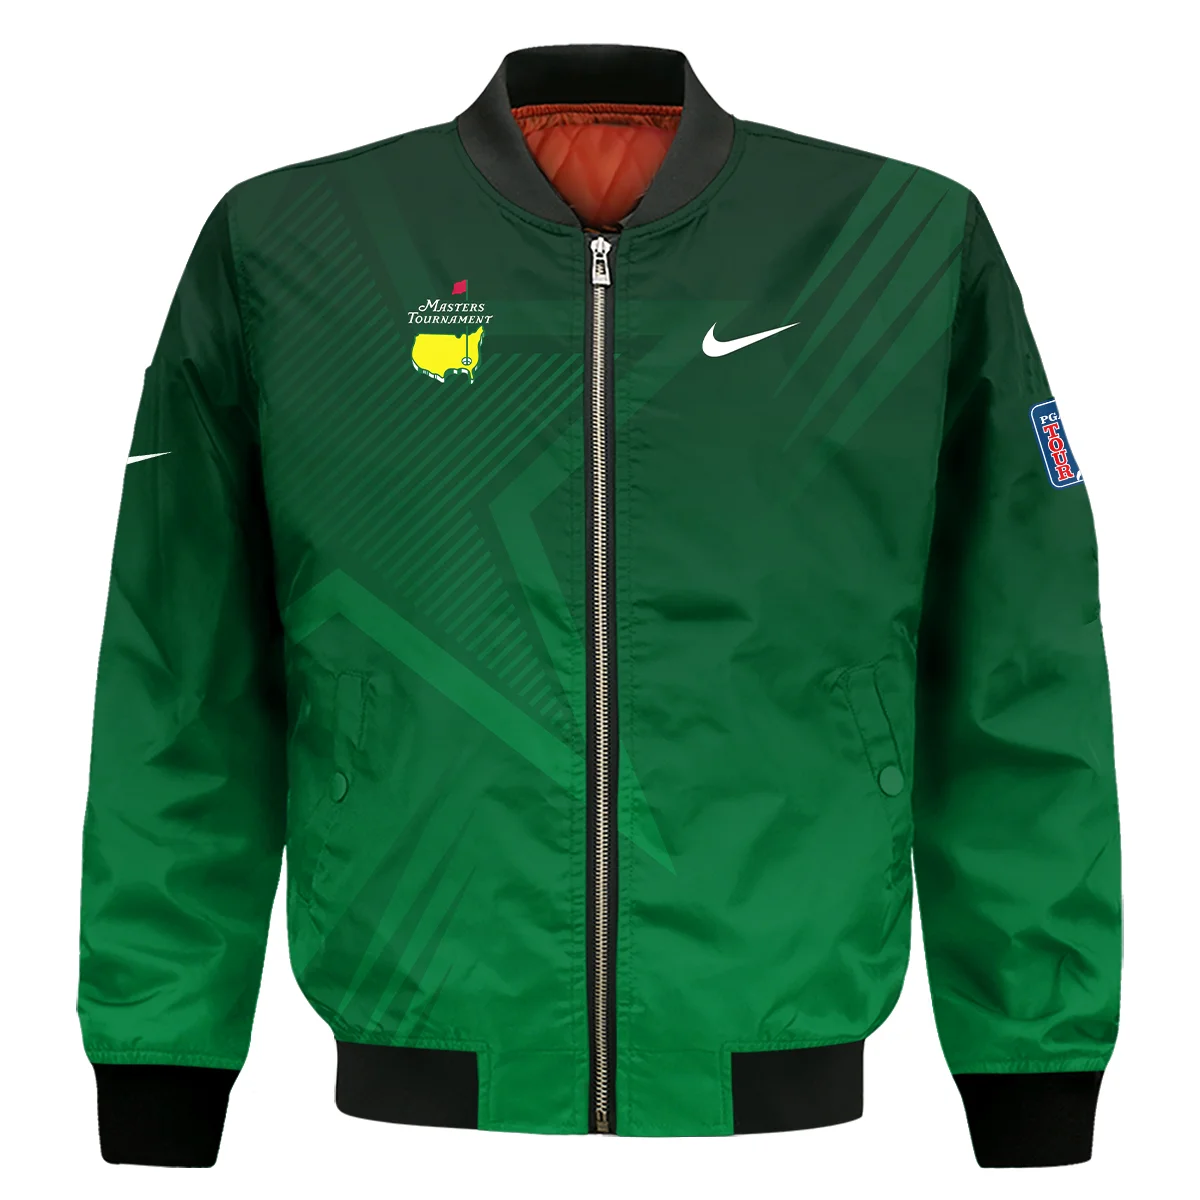 Nike Masters Tournament Polo Shirt Dark Green Gradient Star Pattern Golf Sports Unisex T-Shirt Style Classic T-Shirt